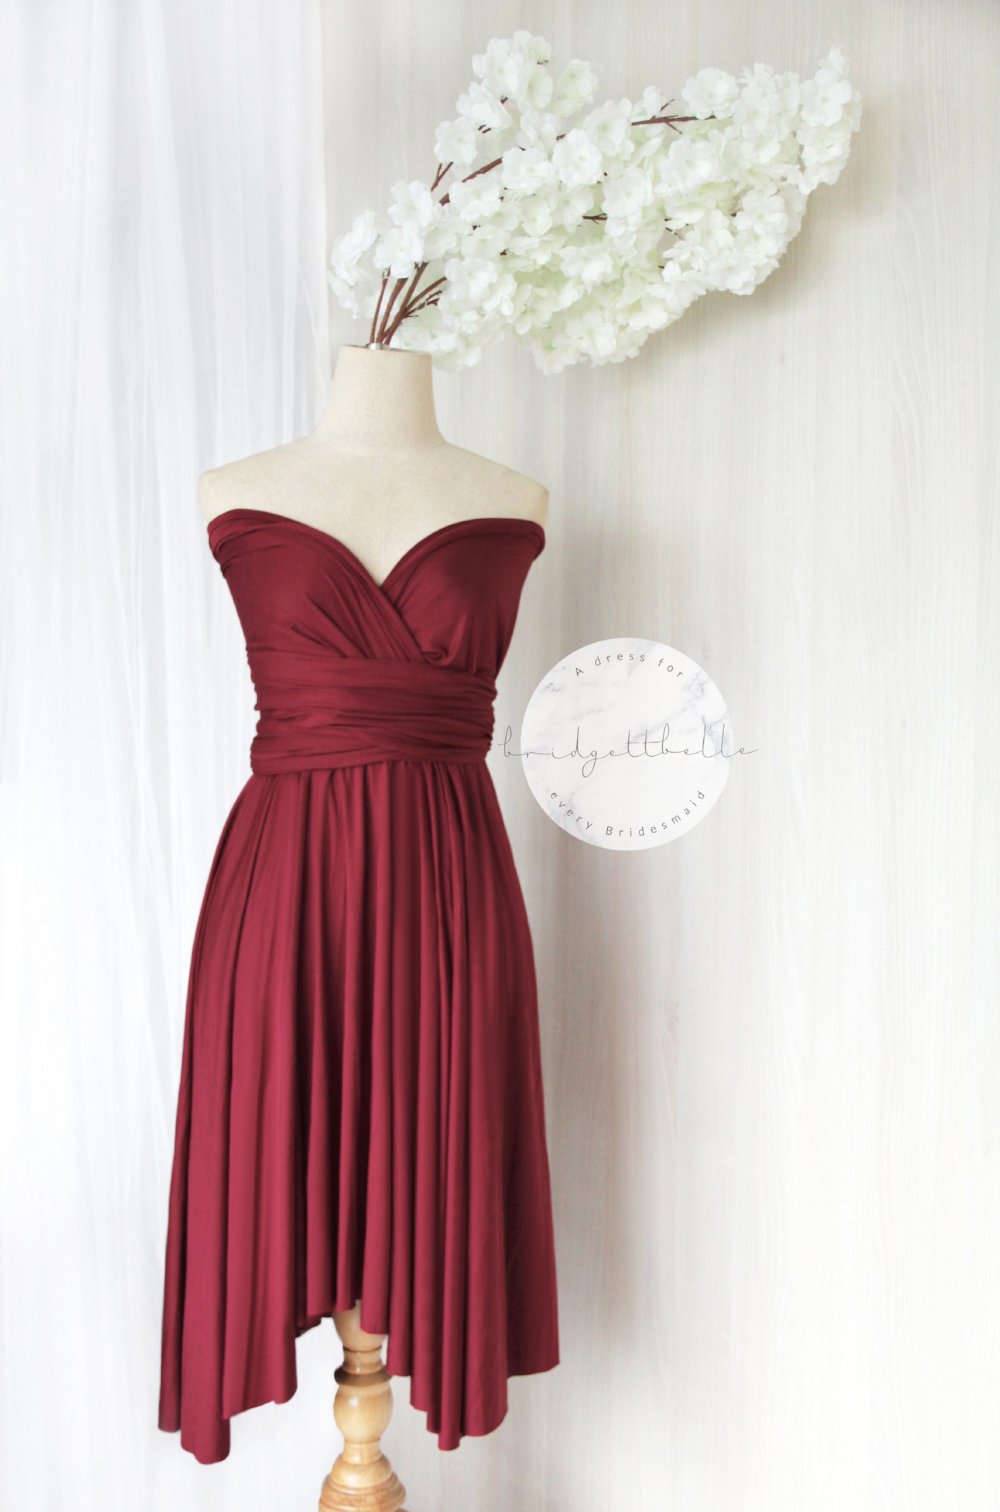 Is Wearing A Red Wedding Dress A Good Idea? | Misfit Wedding